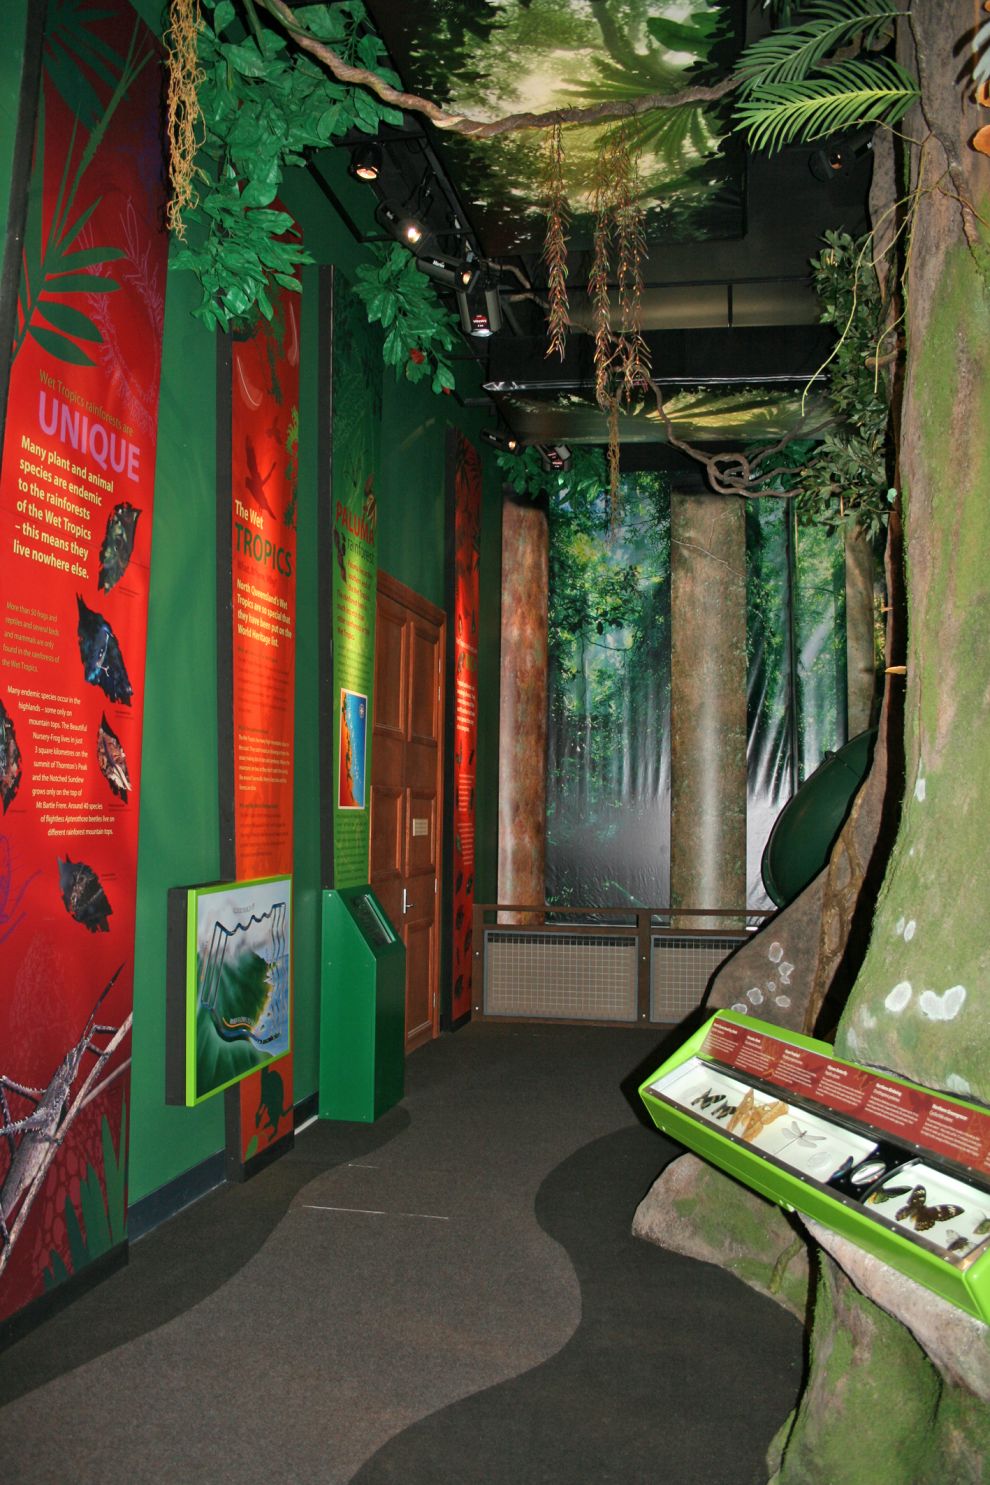  Queensland Tropical Museum Rainforest Exhibit opening, Townsville, December 2007
Photographer: Campbell Clarke